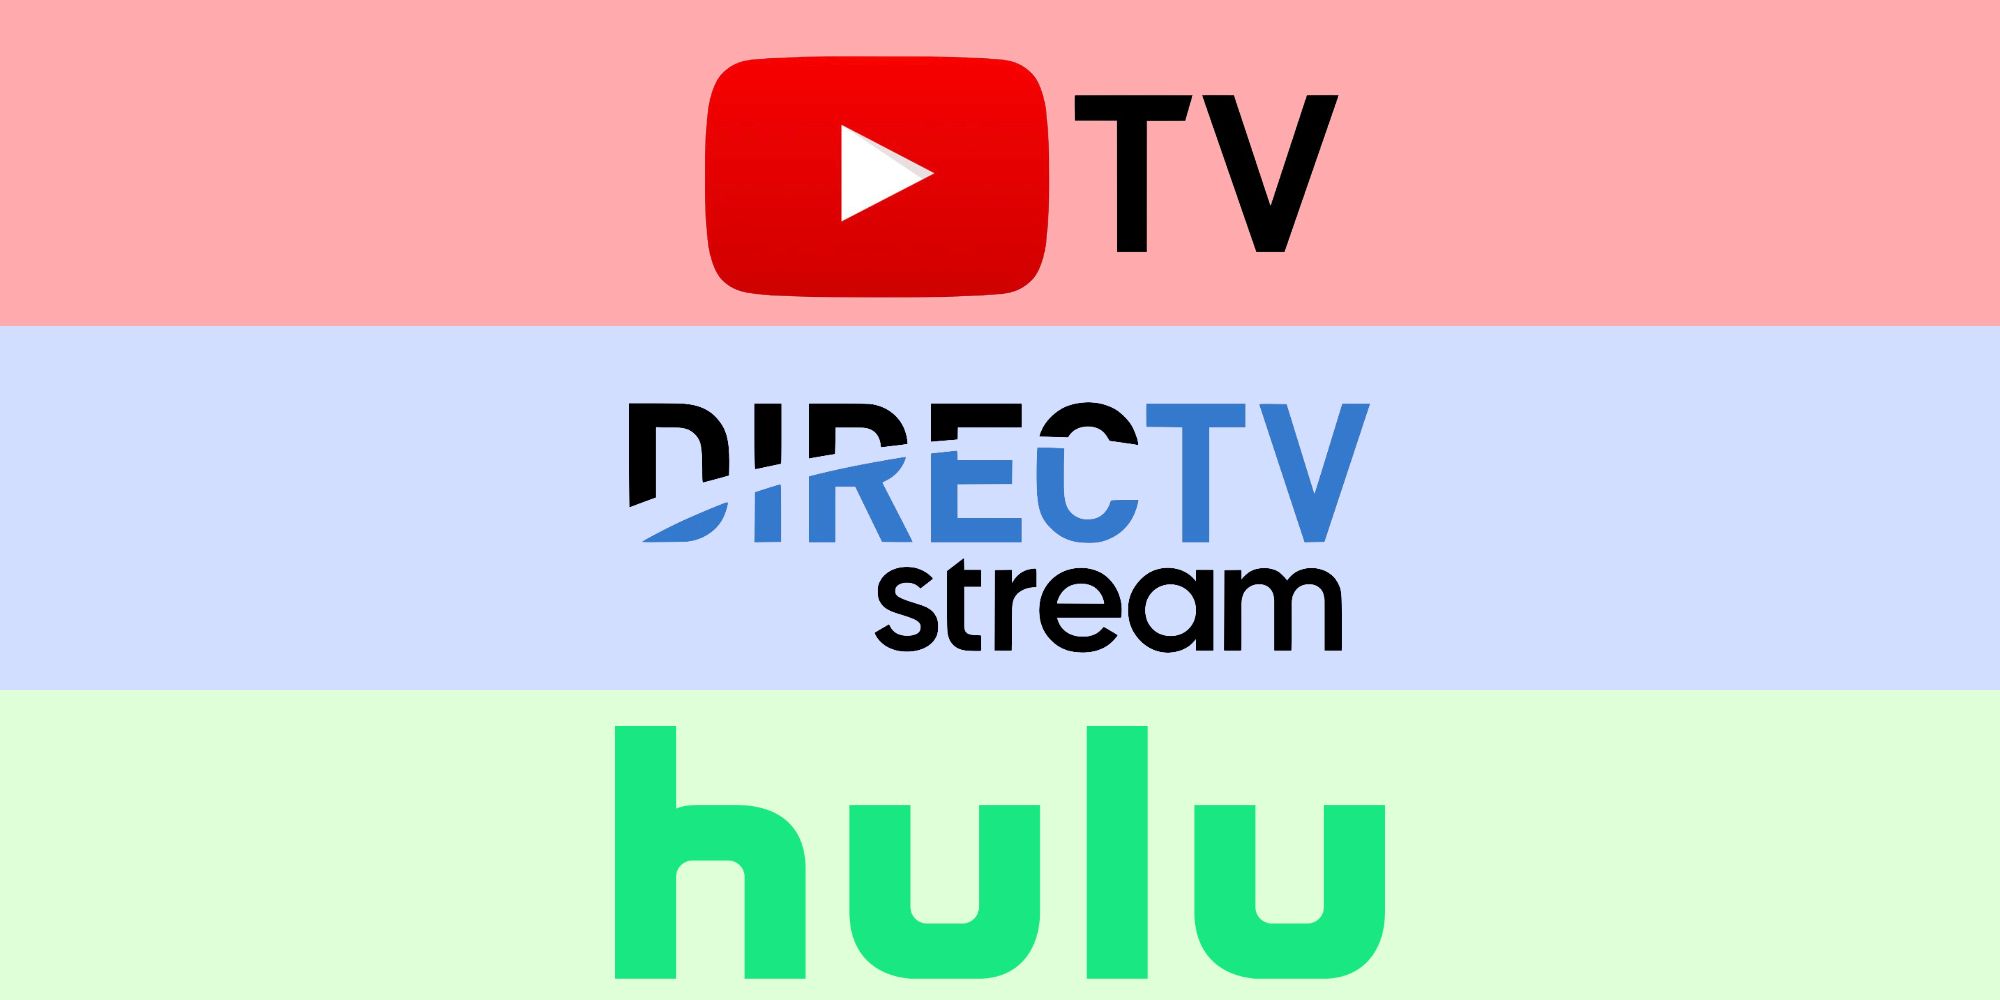 youtube tv directv stream hulu logo